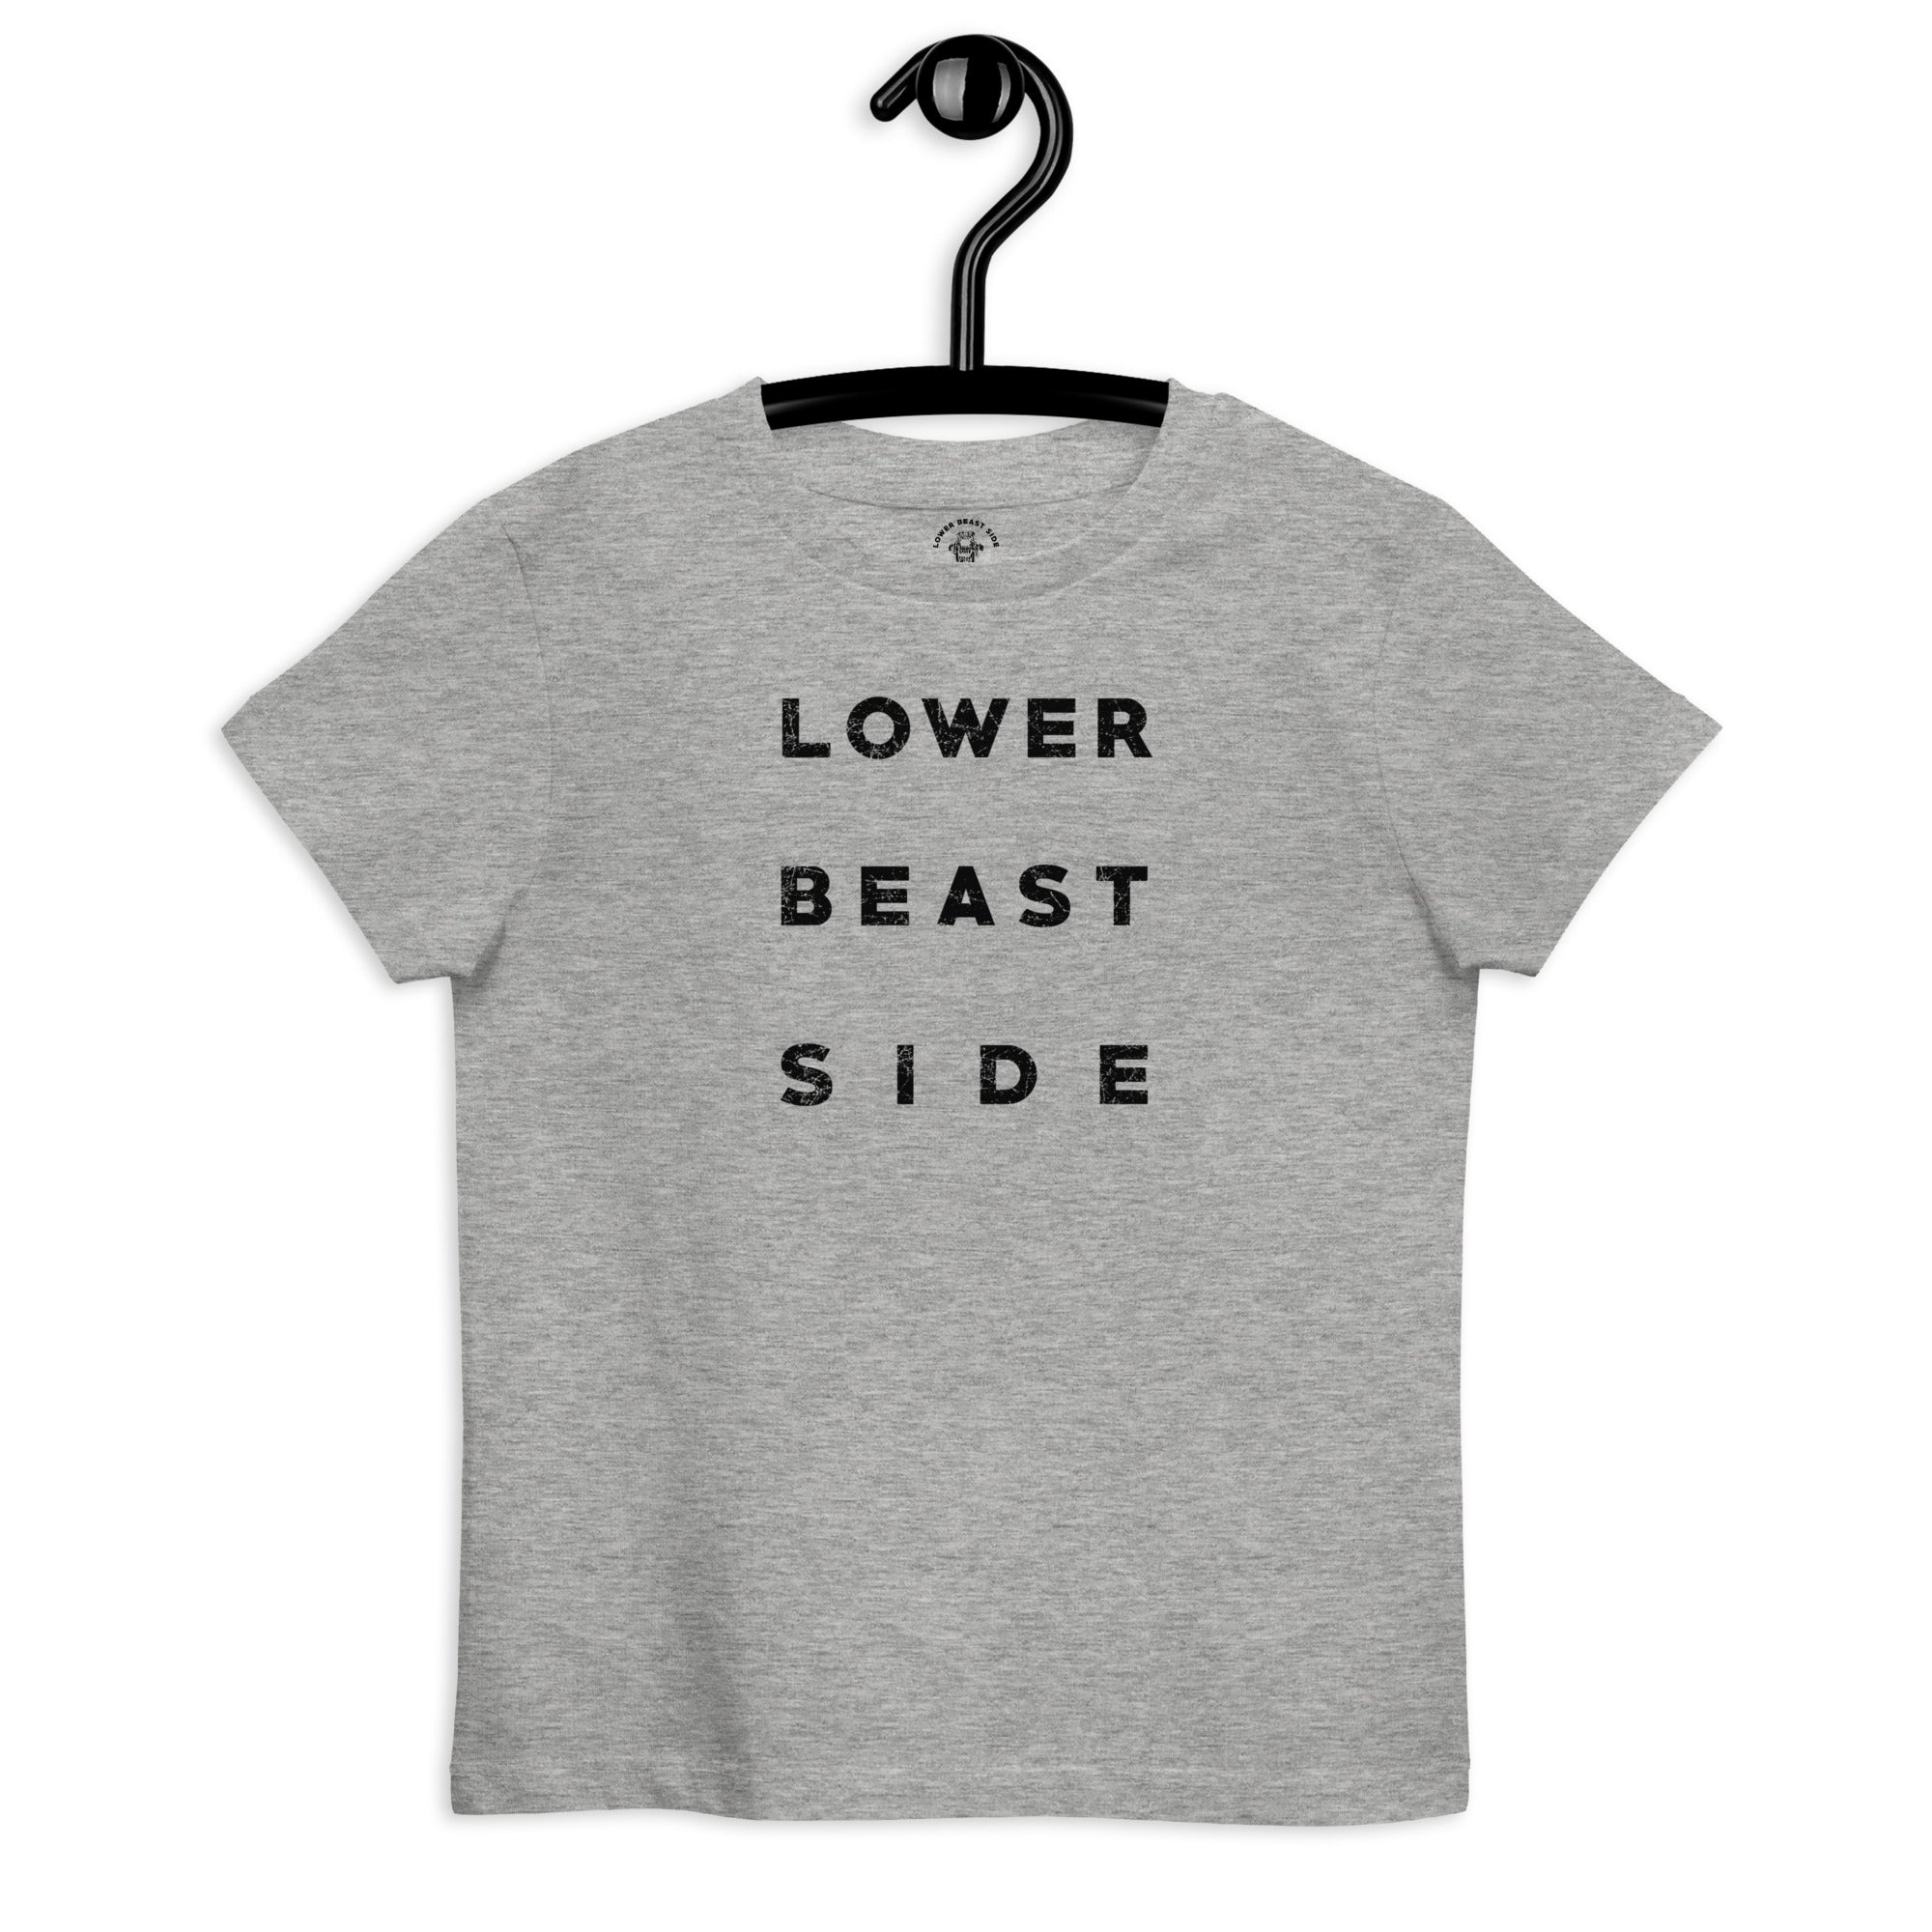 "Lower Beast Side" organic cotton kids t-shirt